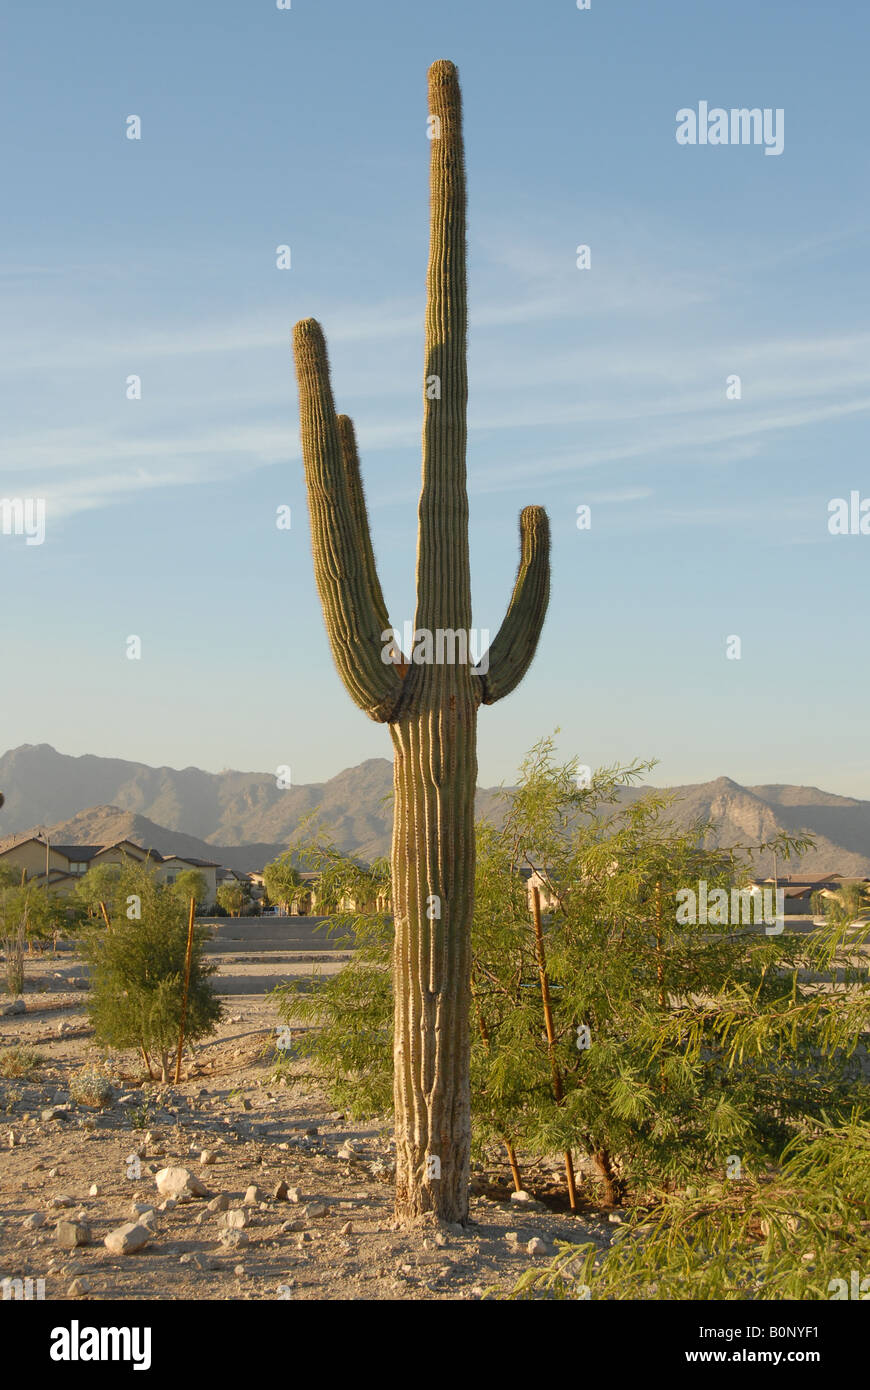 A cactus in a desert of Arizona. Stock Photo